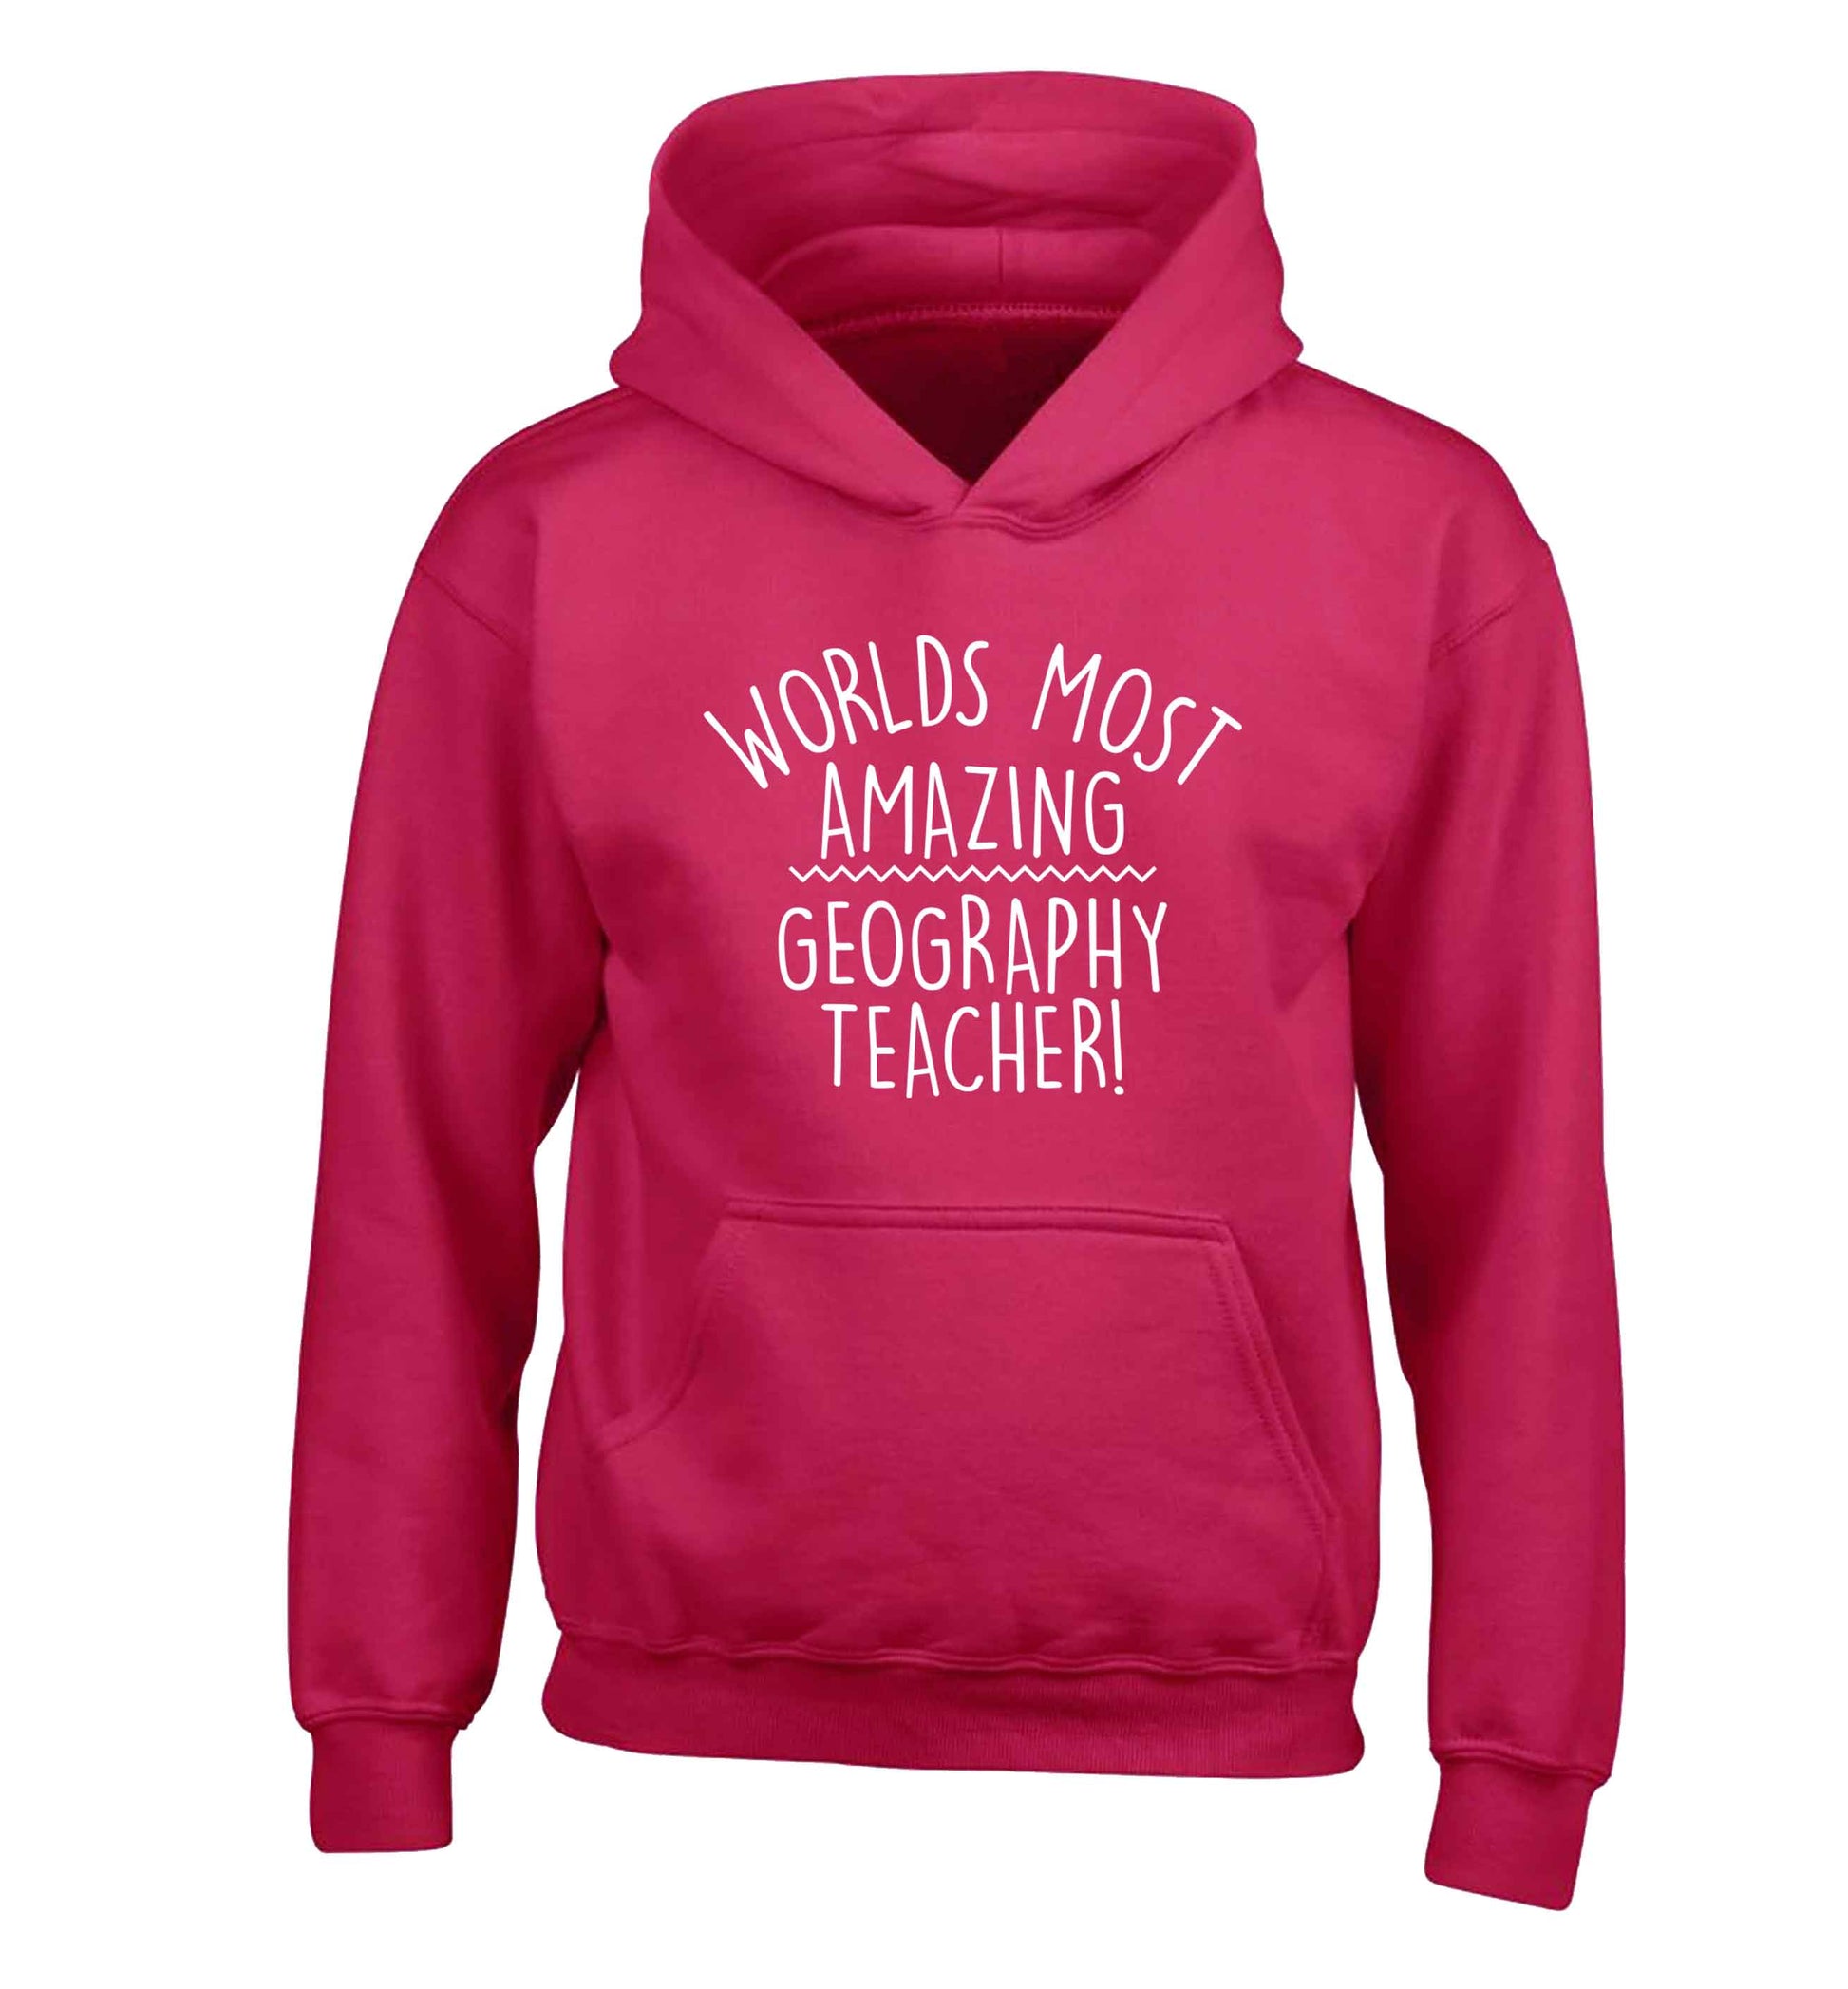 Worlds most amazing geography teacher children's pink hoodie 12-13 Years